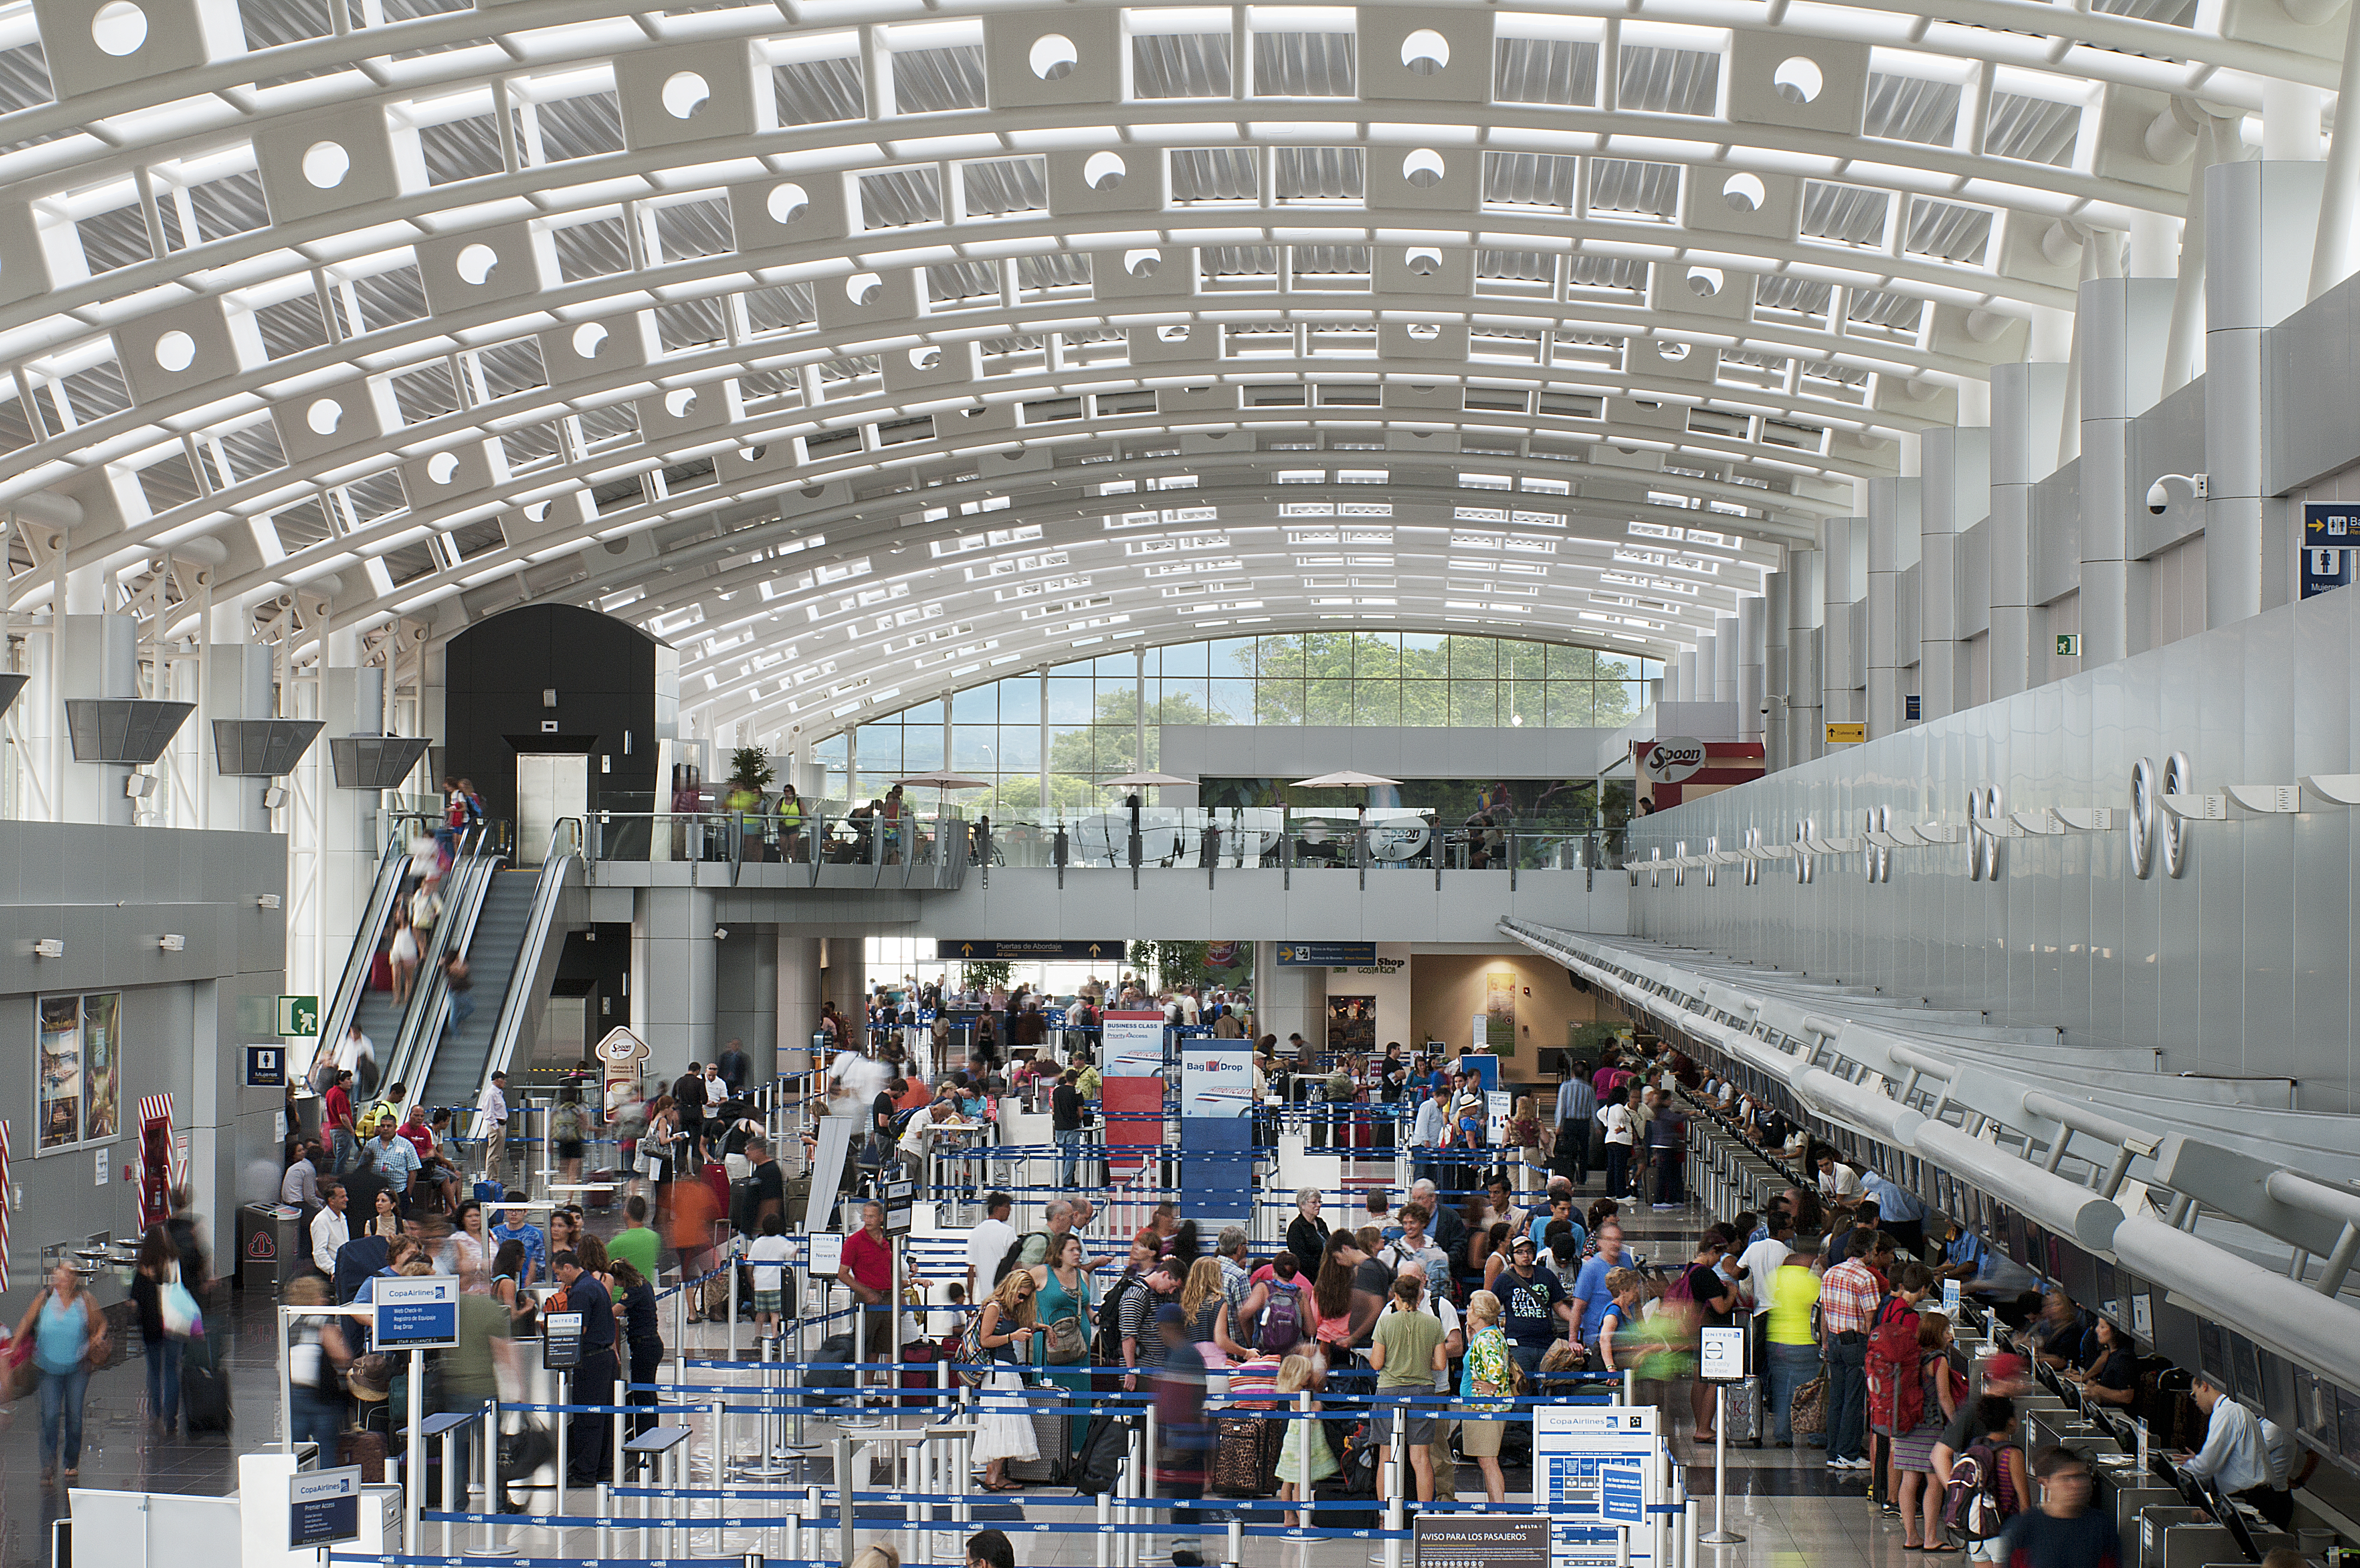 Migración responsabiliza a administrador de aeropuerto por largas filas que agobian a viajeros